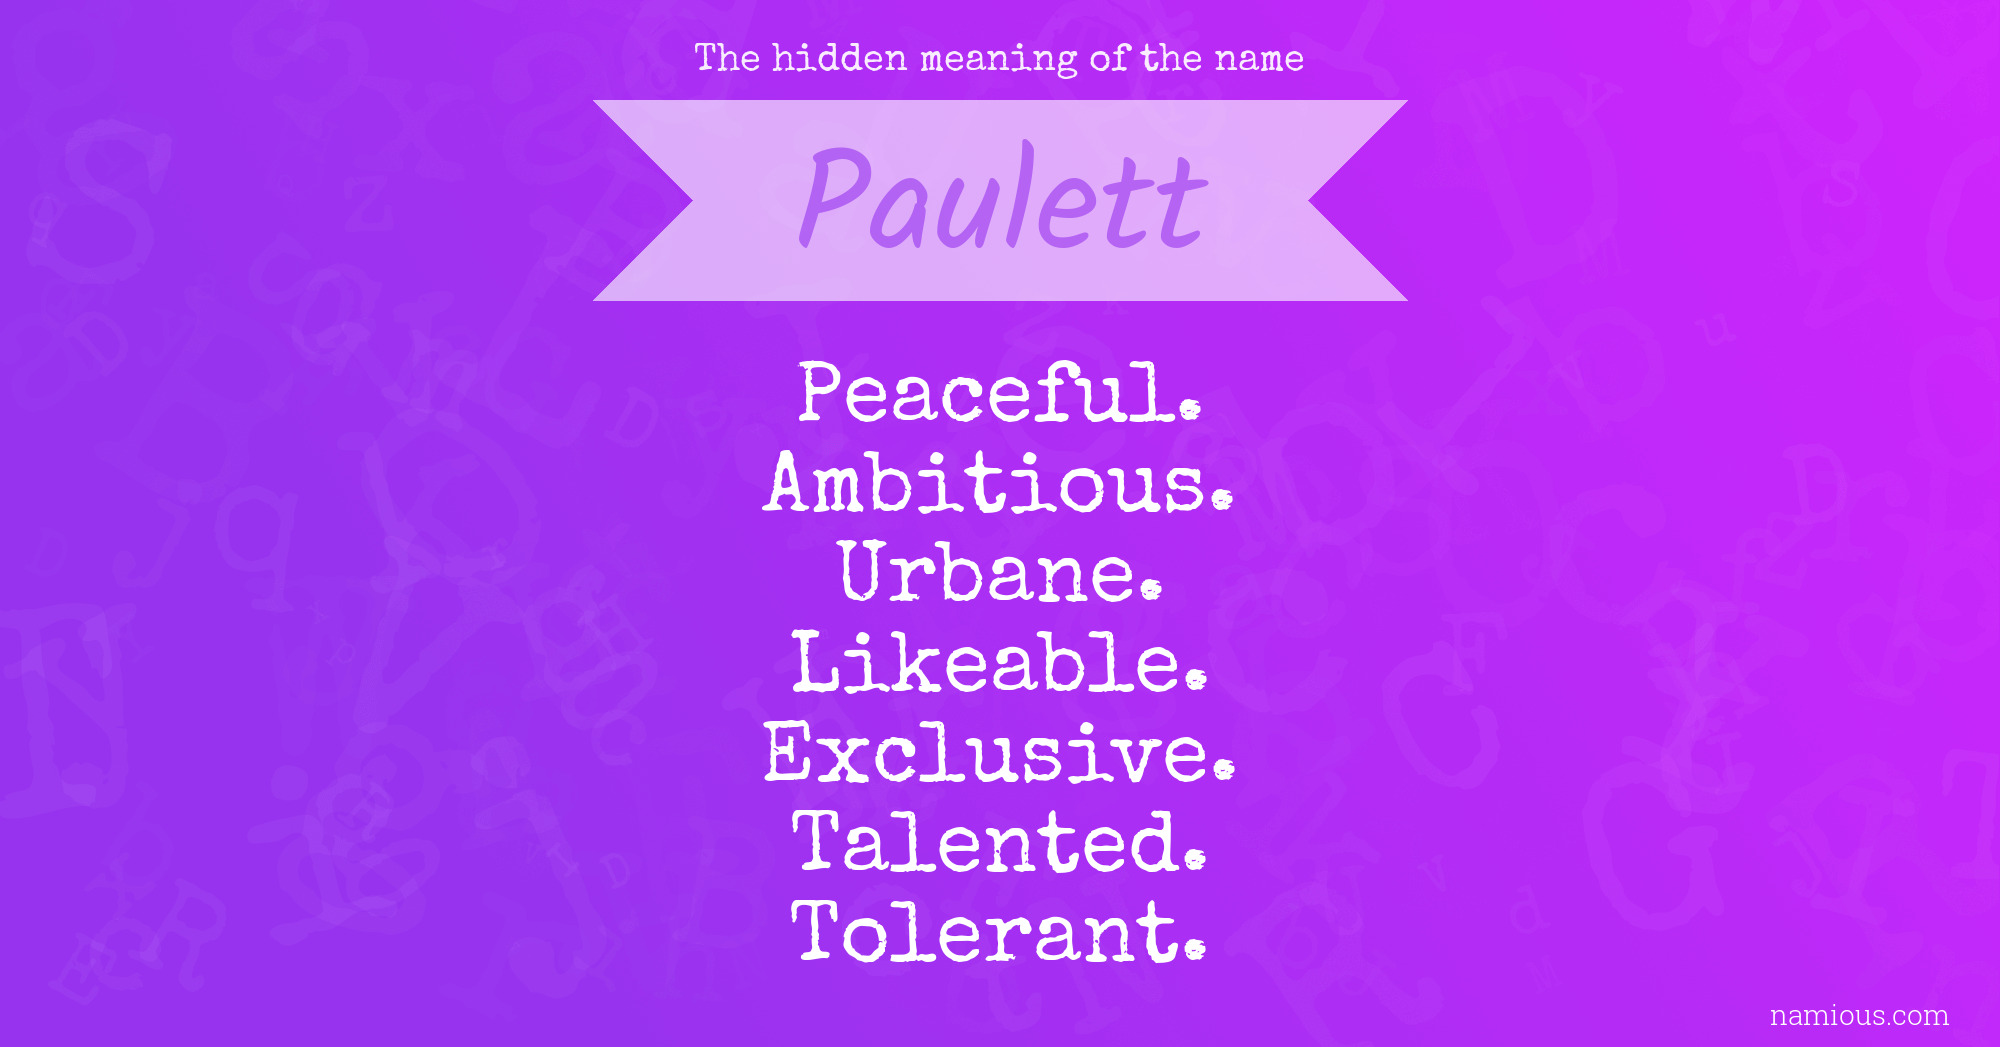 The hidden meaning of the name Paulett